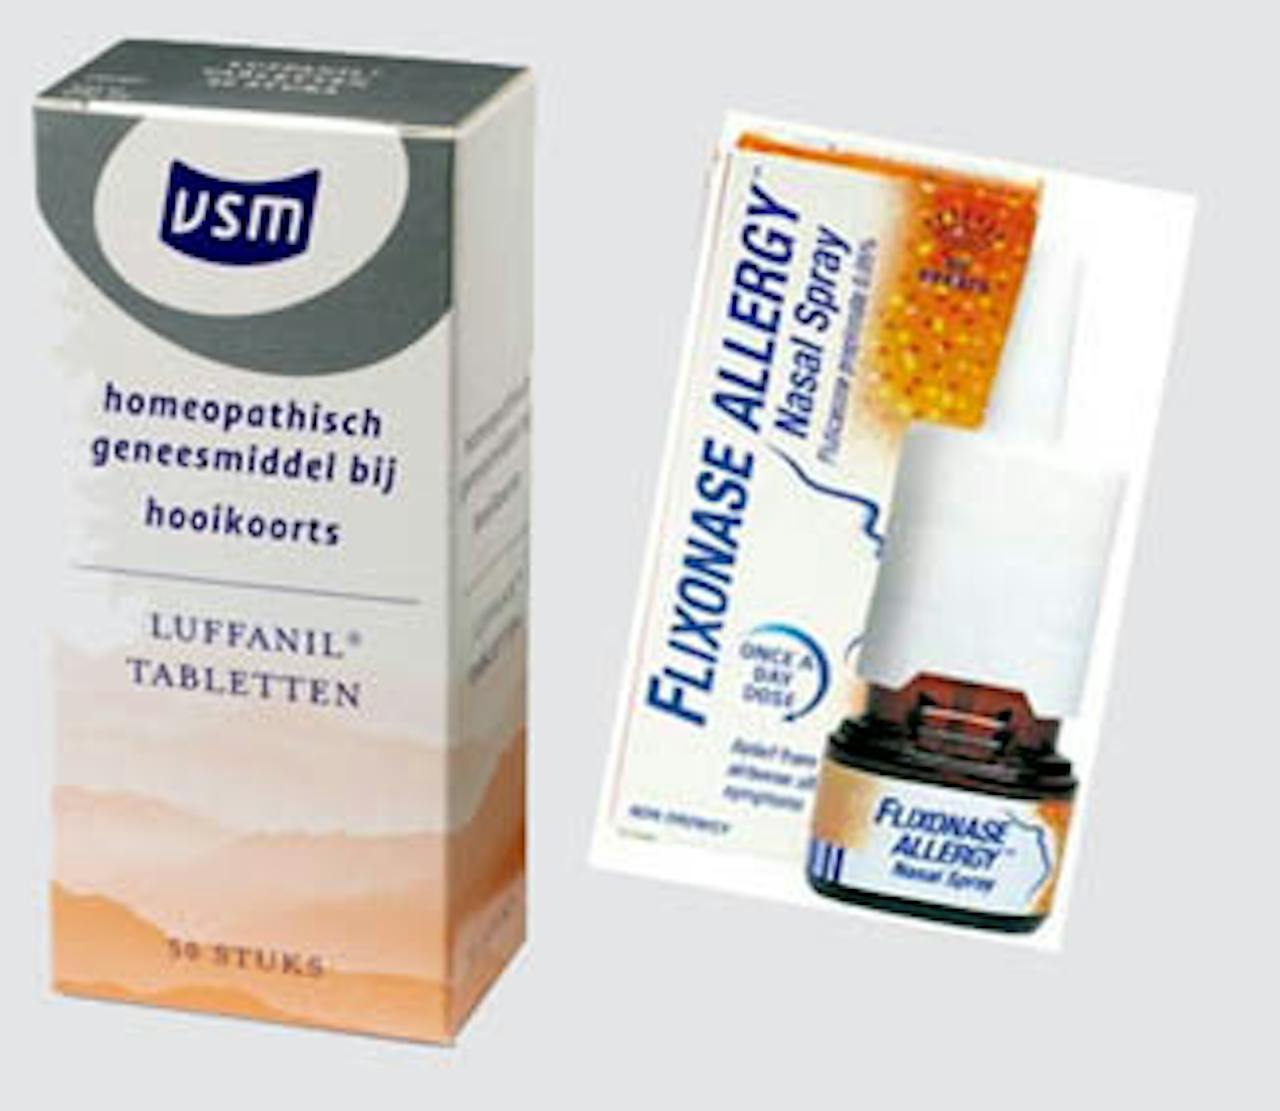 Twee middelen tegen hooikoorts: Luffanil-tabletten en Flixonase Allergy.